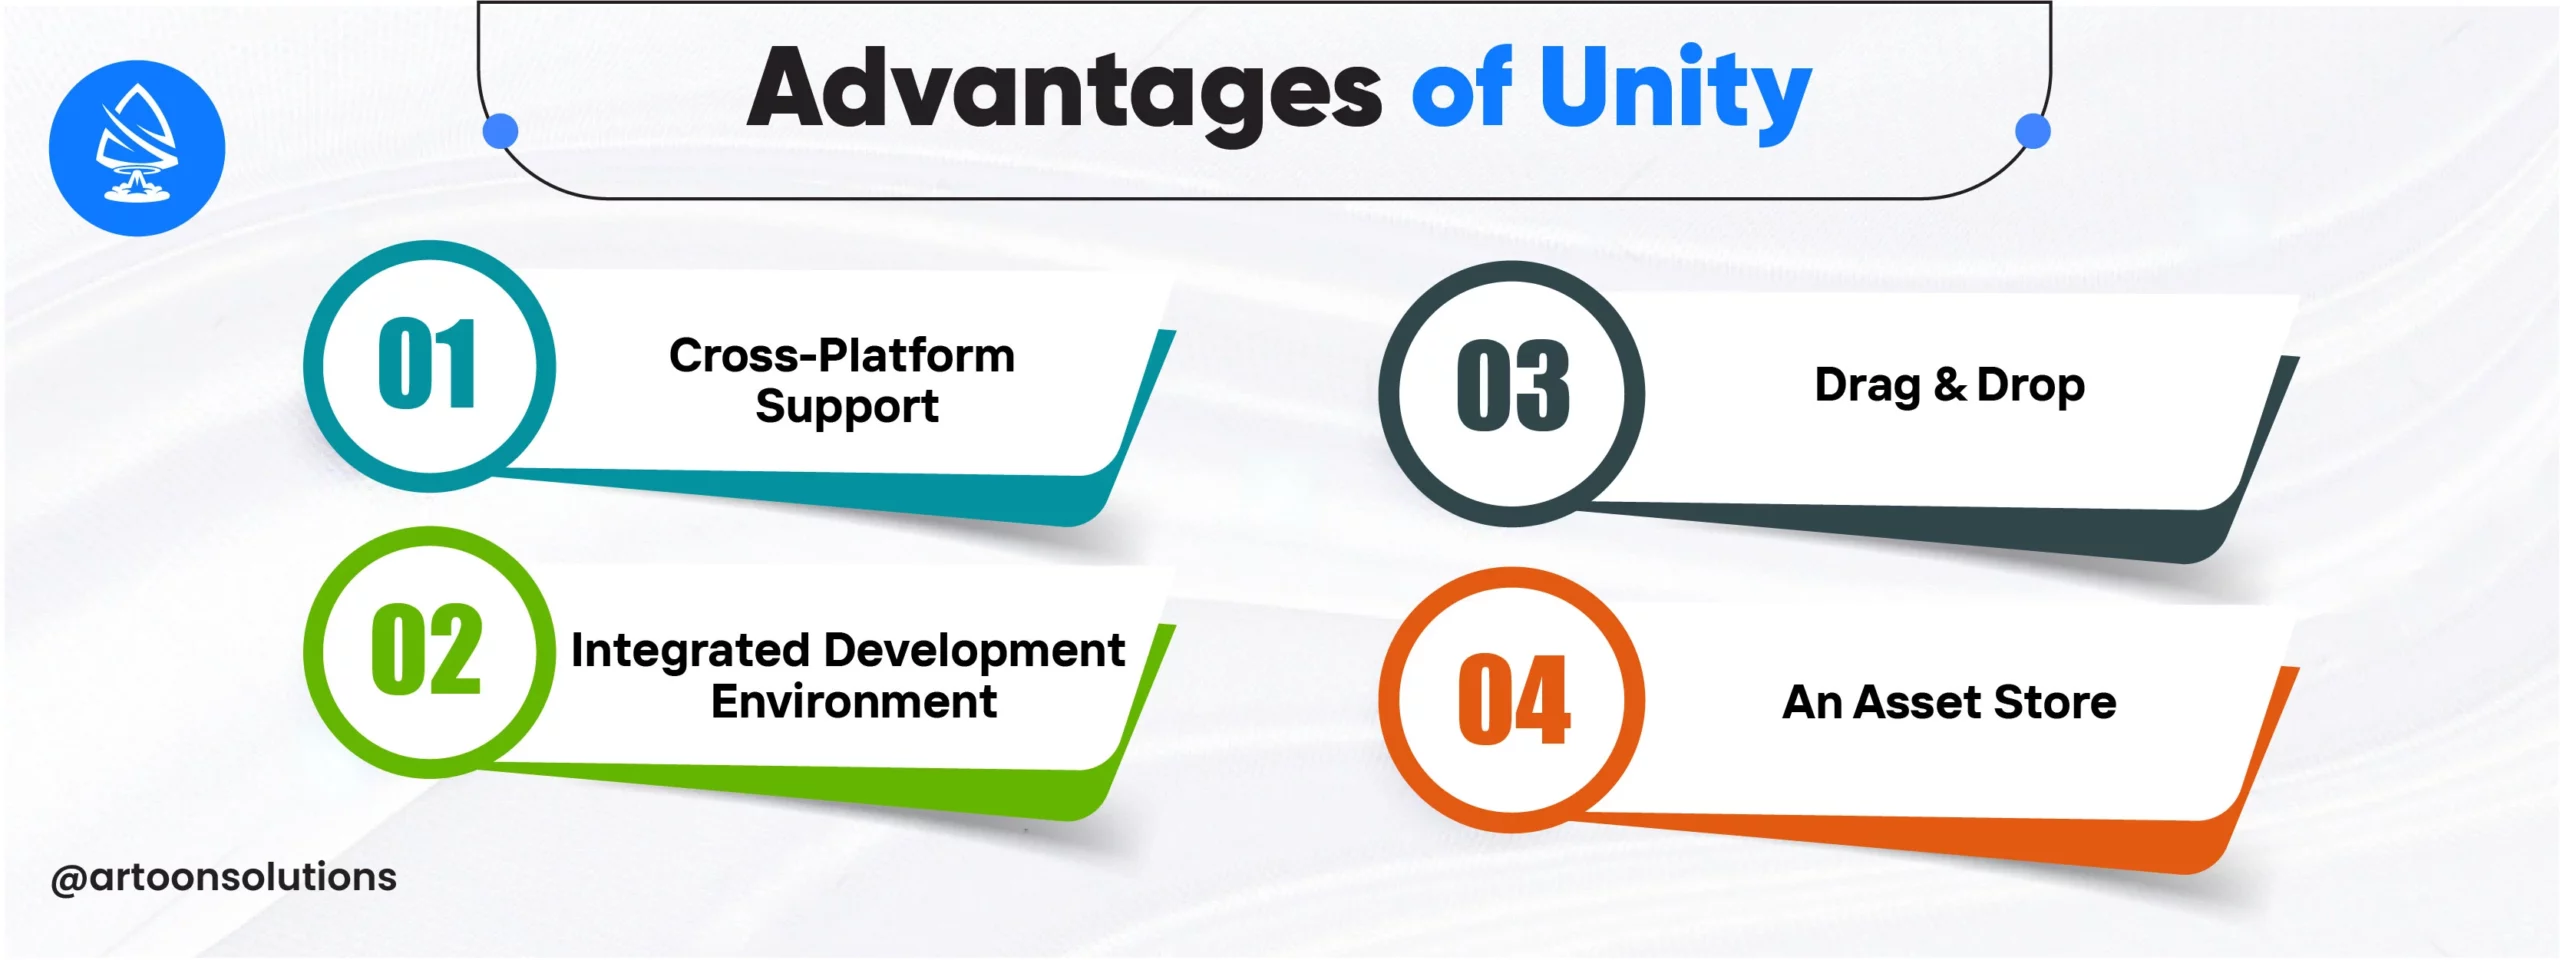 Advantages of Unity